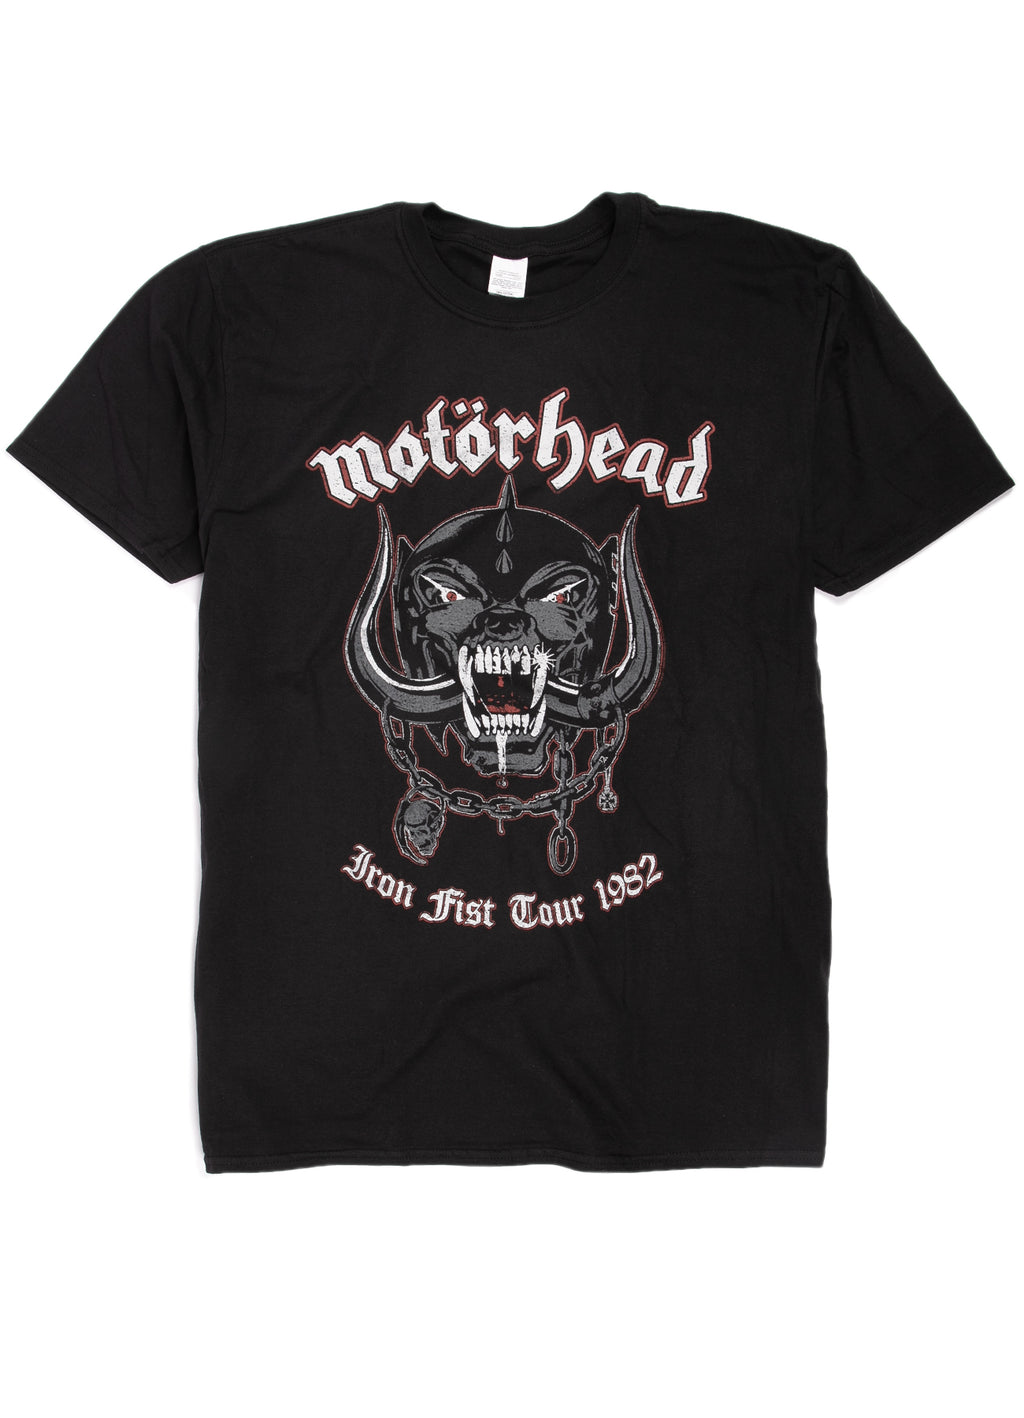 Motörhead Iron Fist Tour 1982 t-shirt.